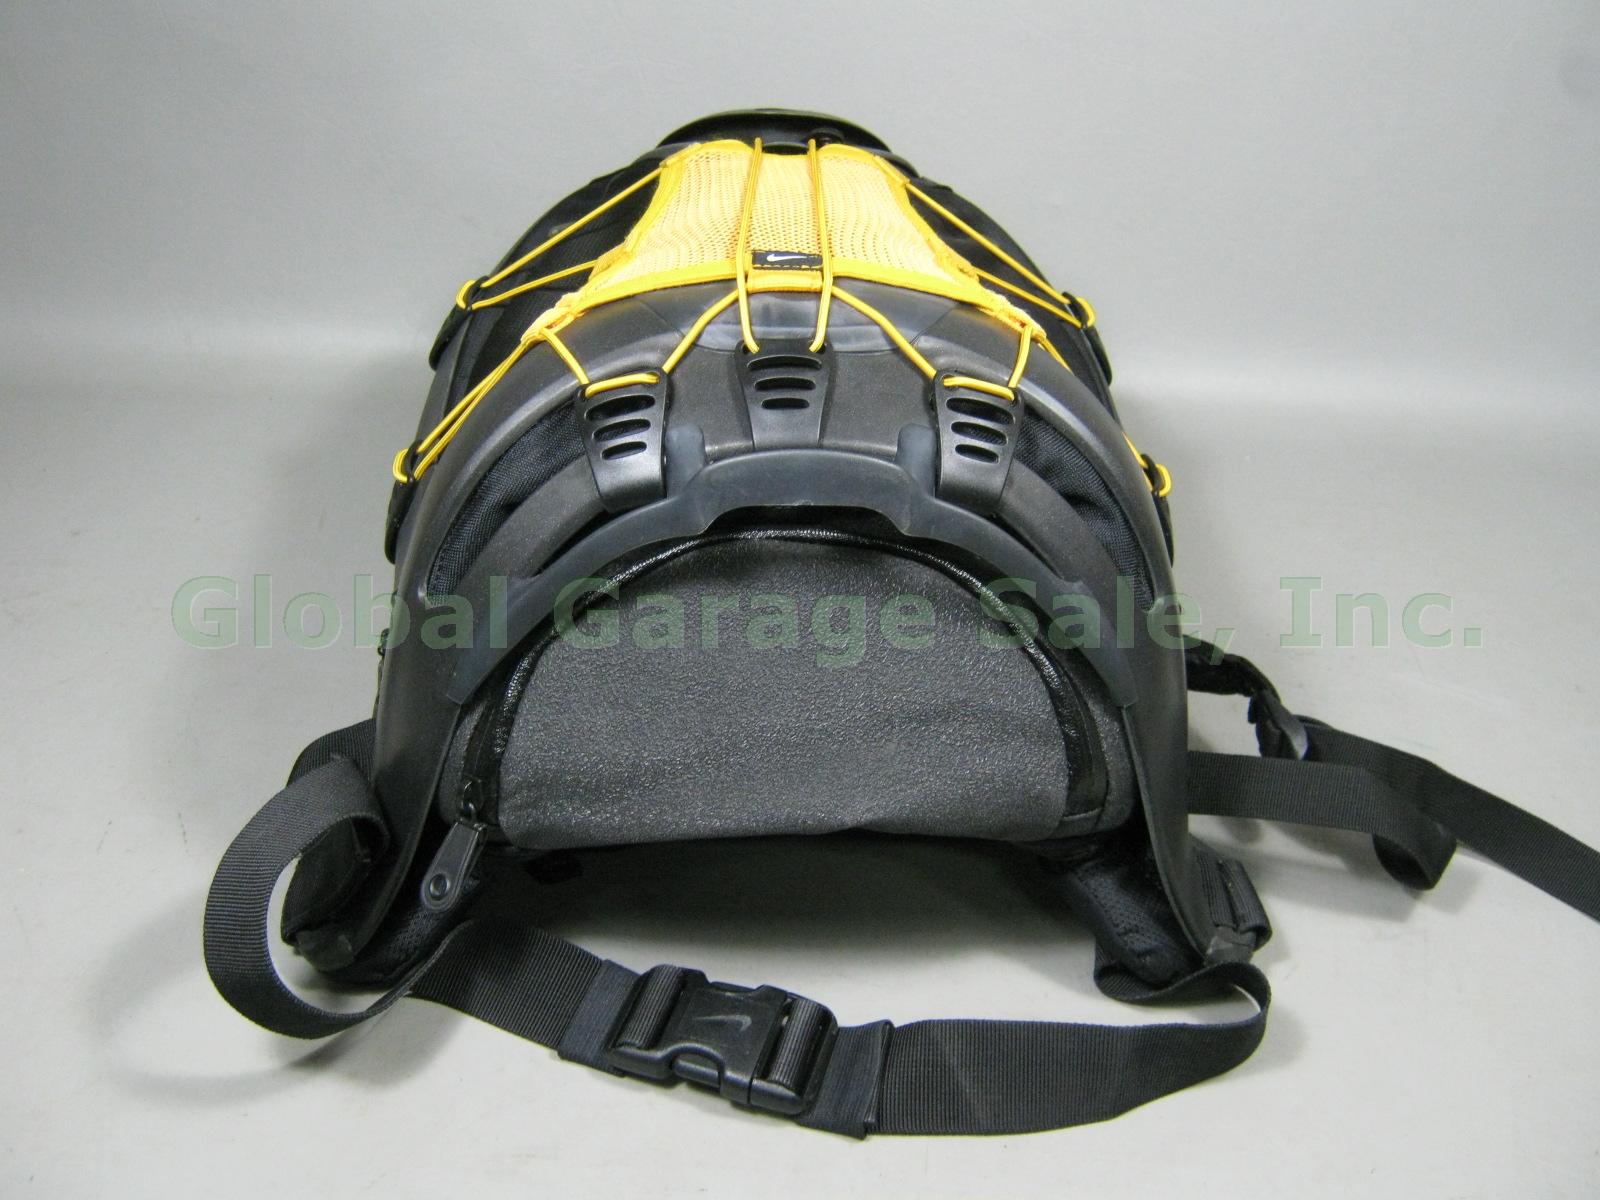 NOS New Old Stock Nike Epic E1 BioKNX Backpack With Tags Exoskeleton Hardshell 5